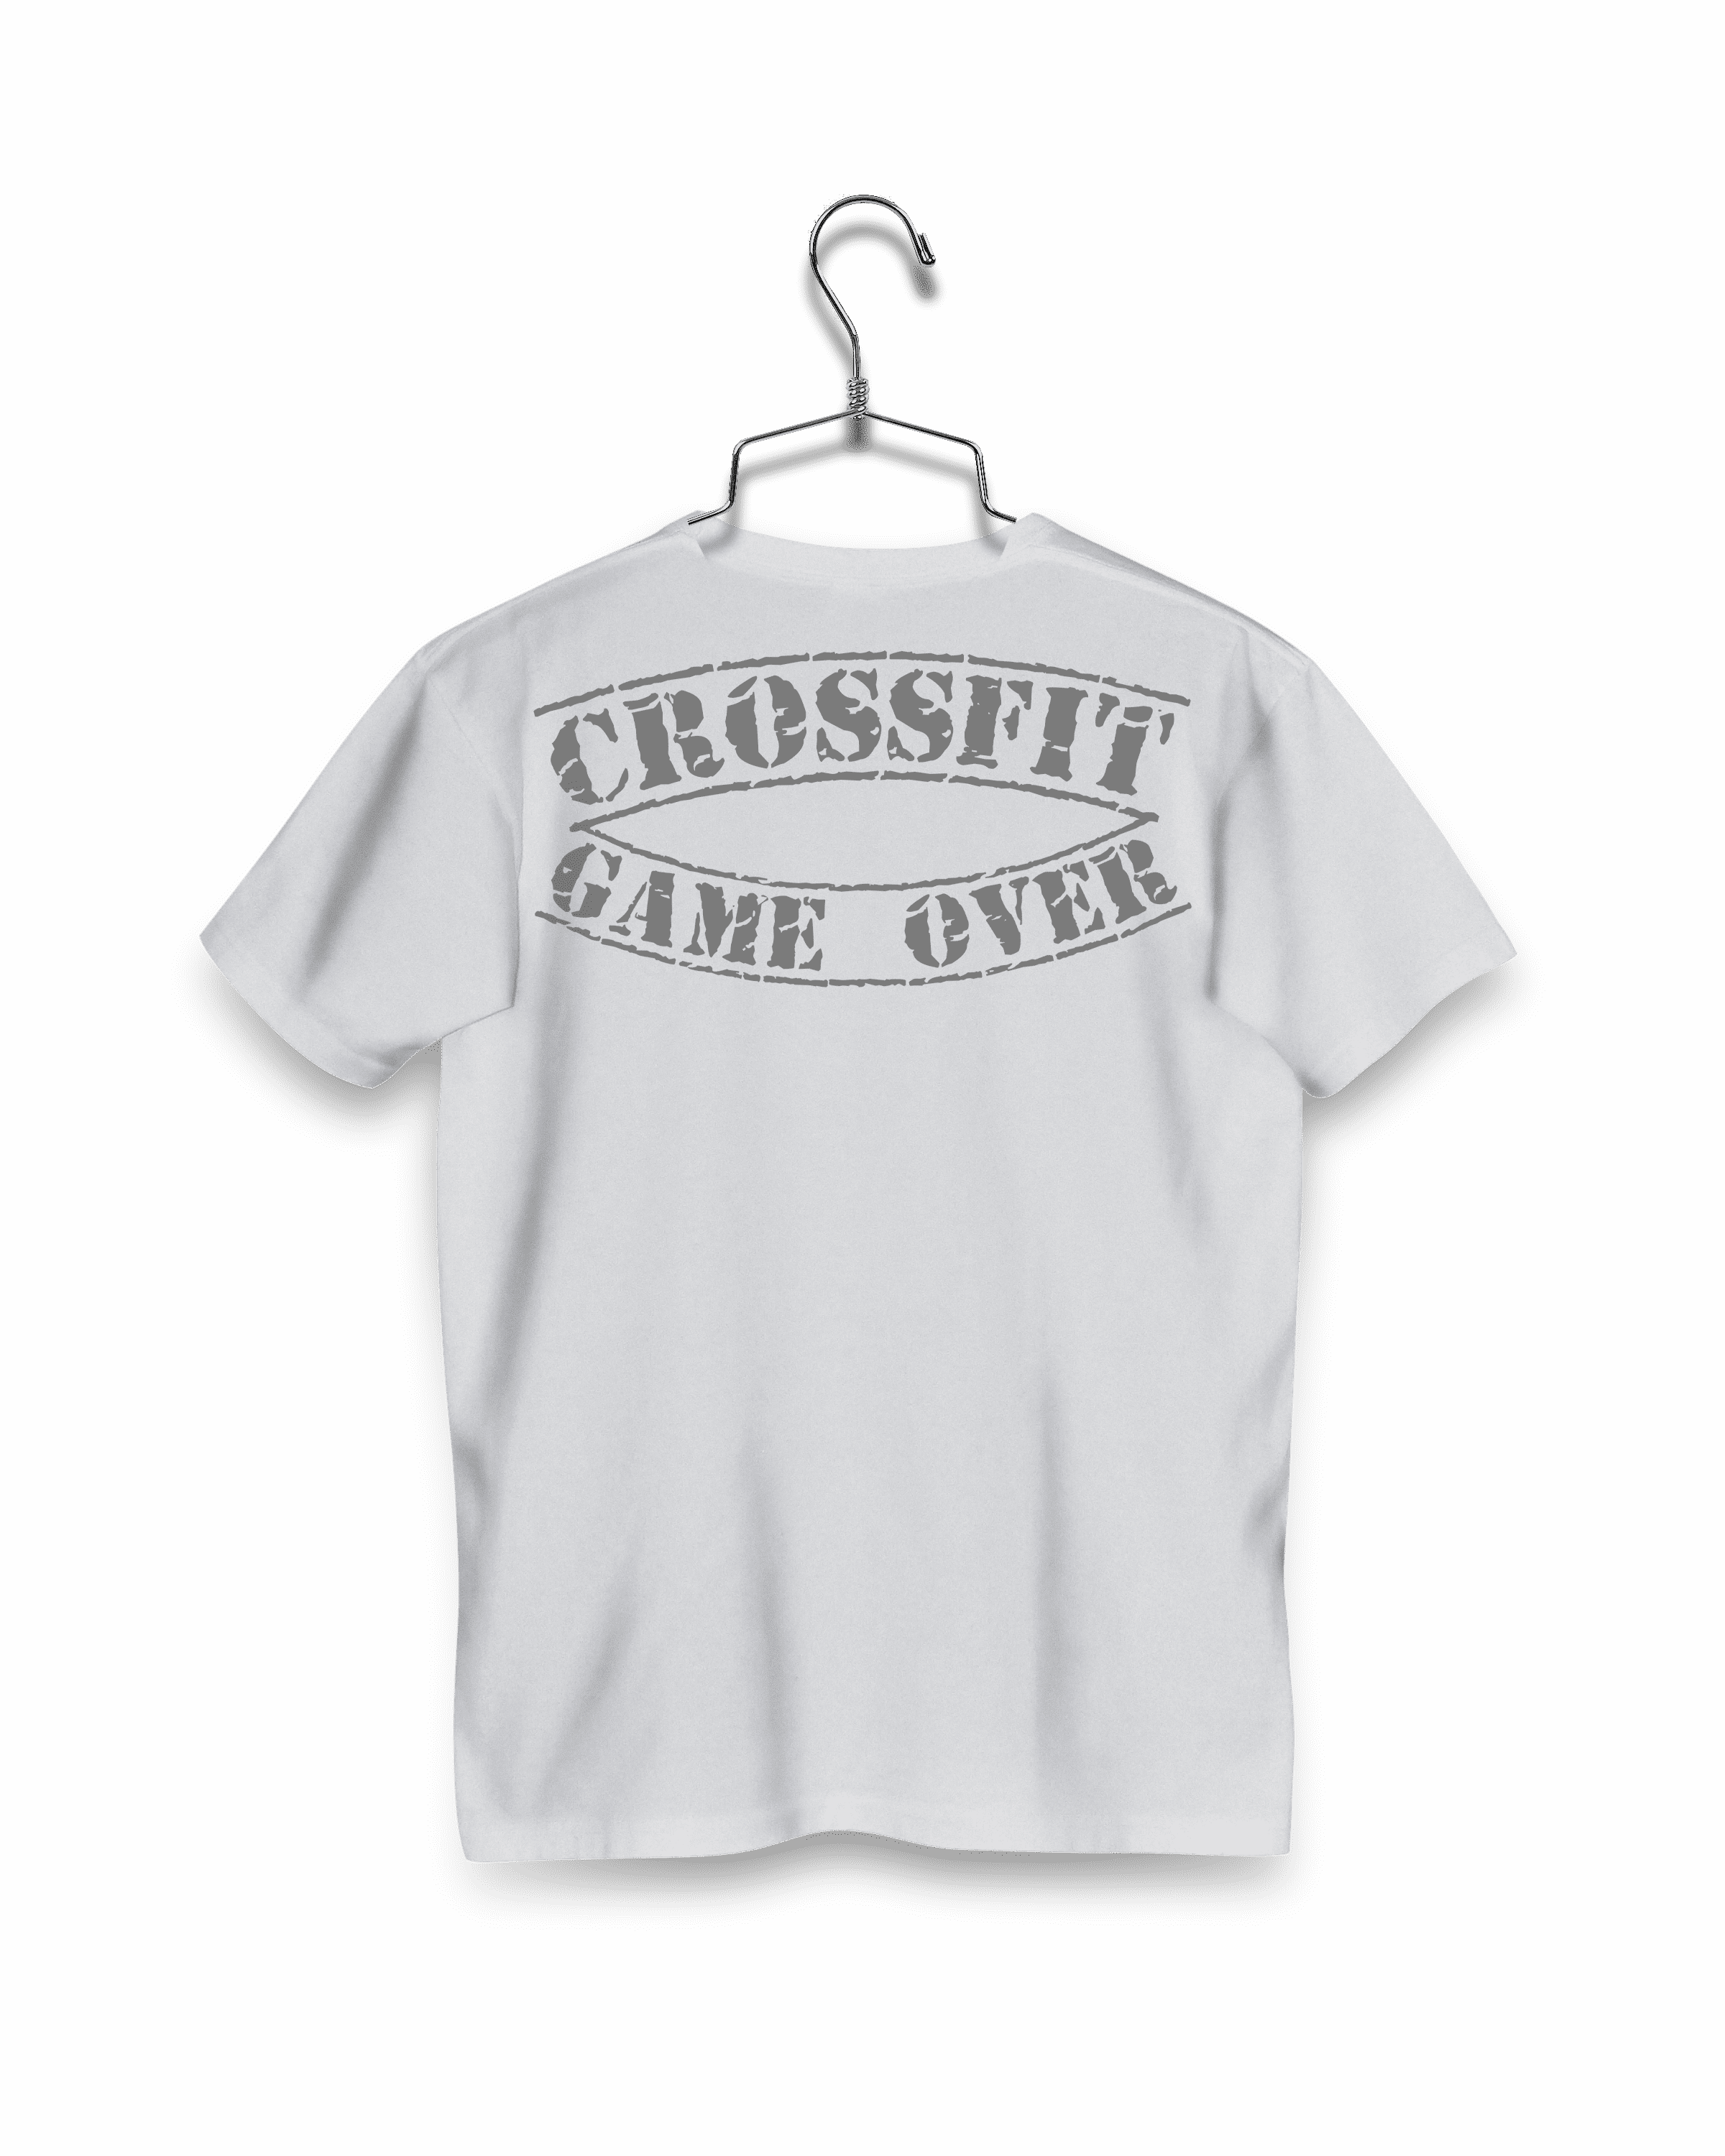 "Crossfit 1"